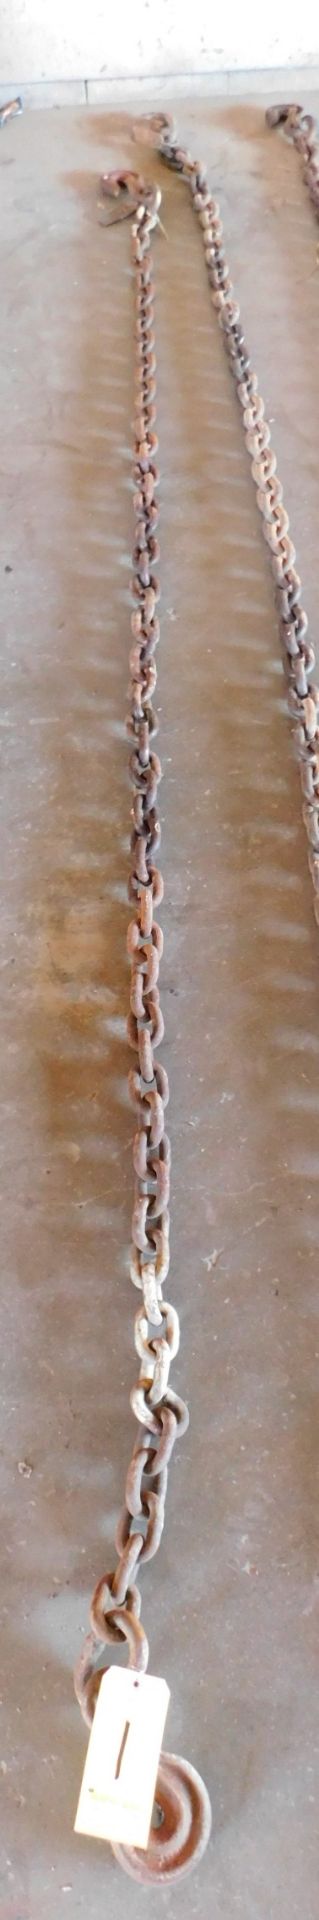 Chain, 2 Hook, 12 ft. Long, 5/8 inch Link, 18,000 lb. cap